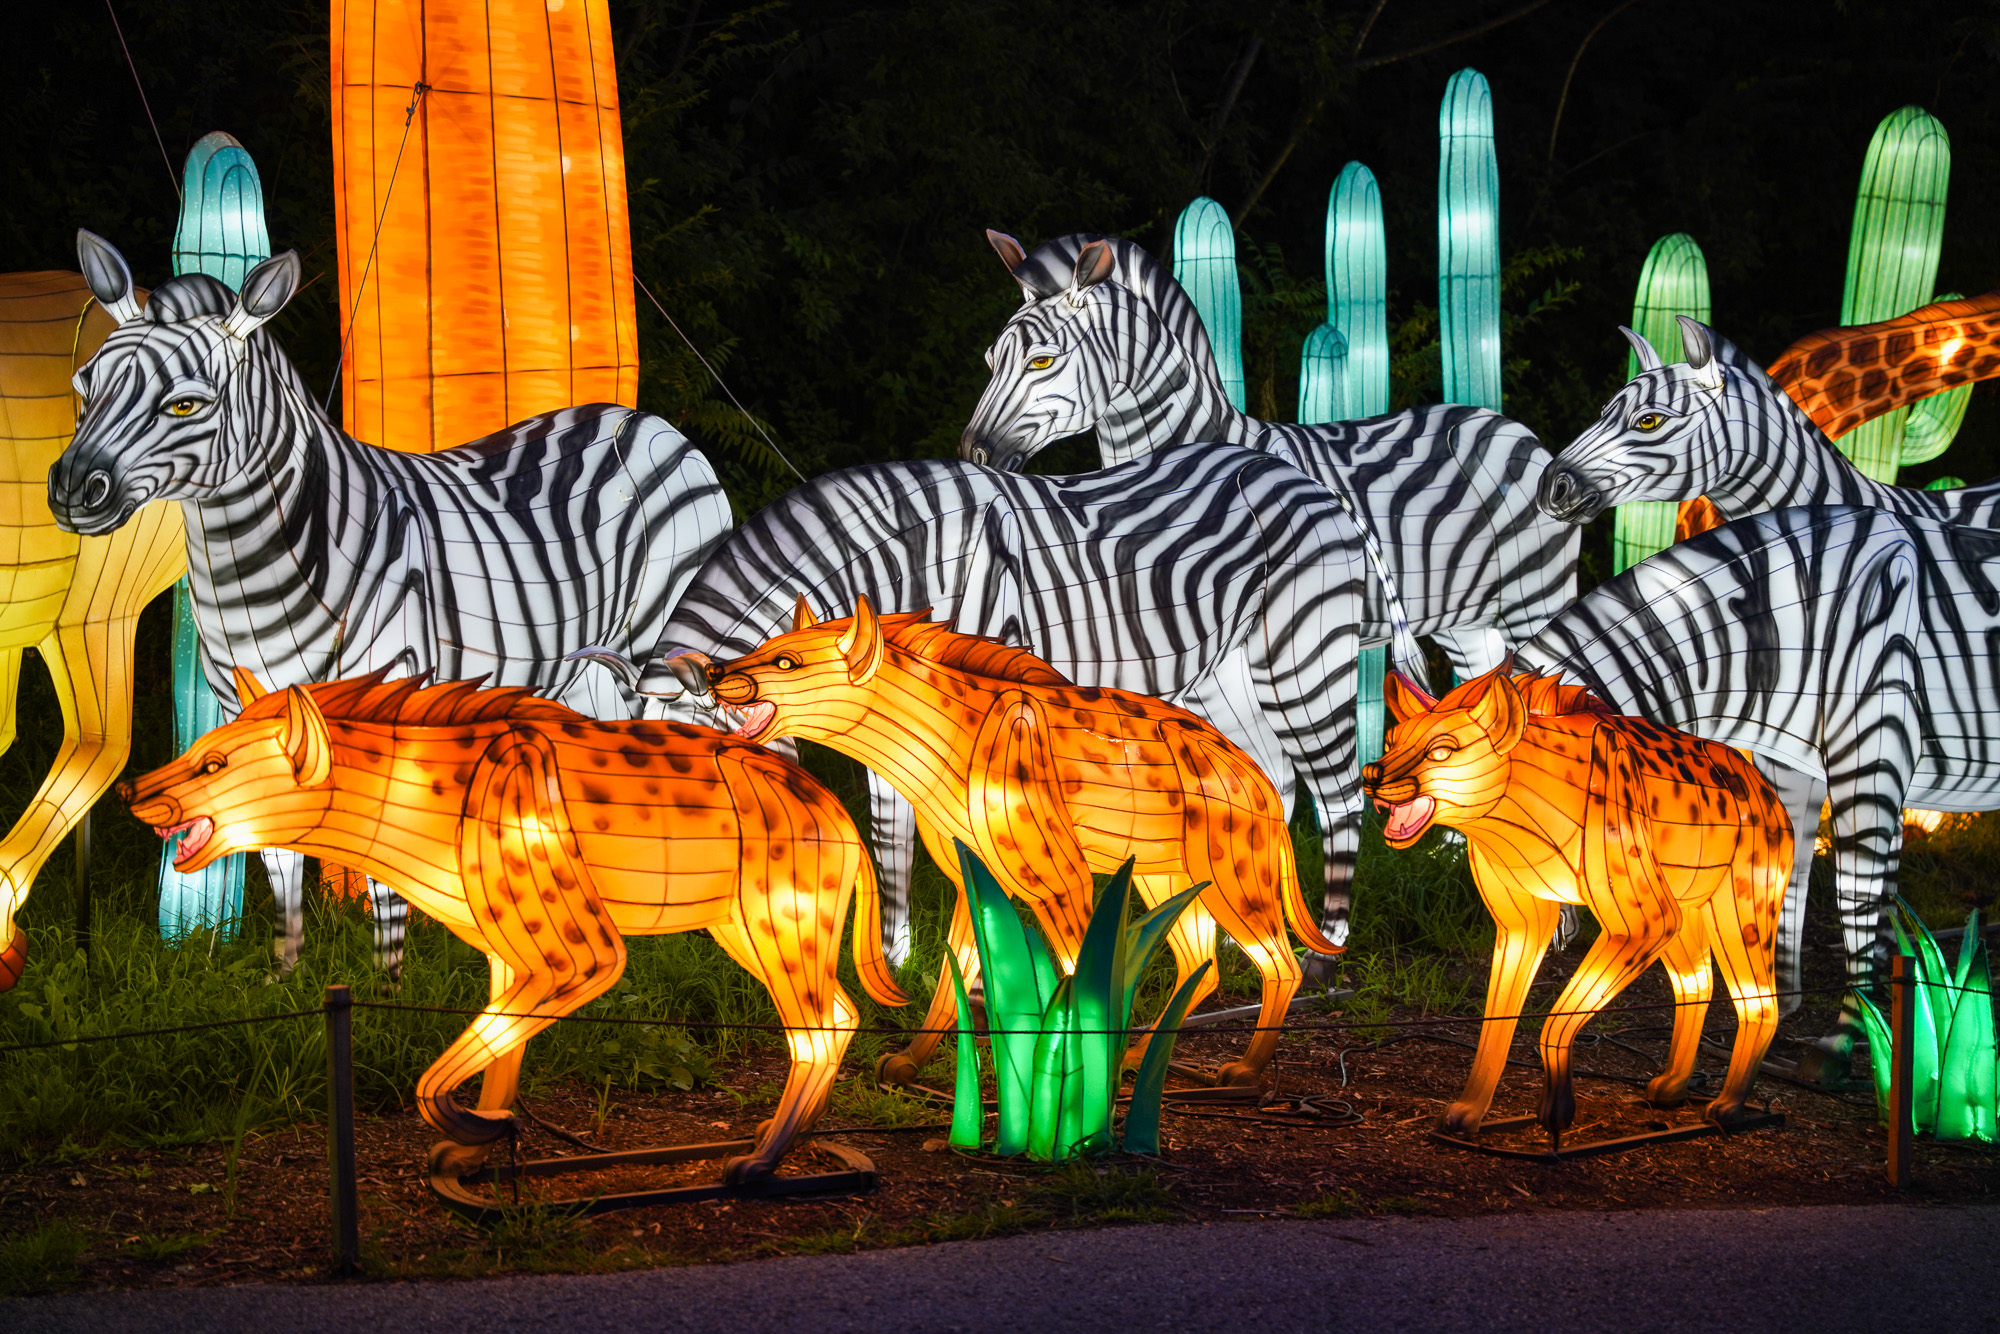 The Asian Lantern Festival Celebrates Animals, Culture, and More